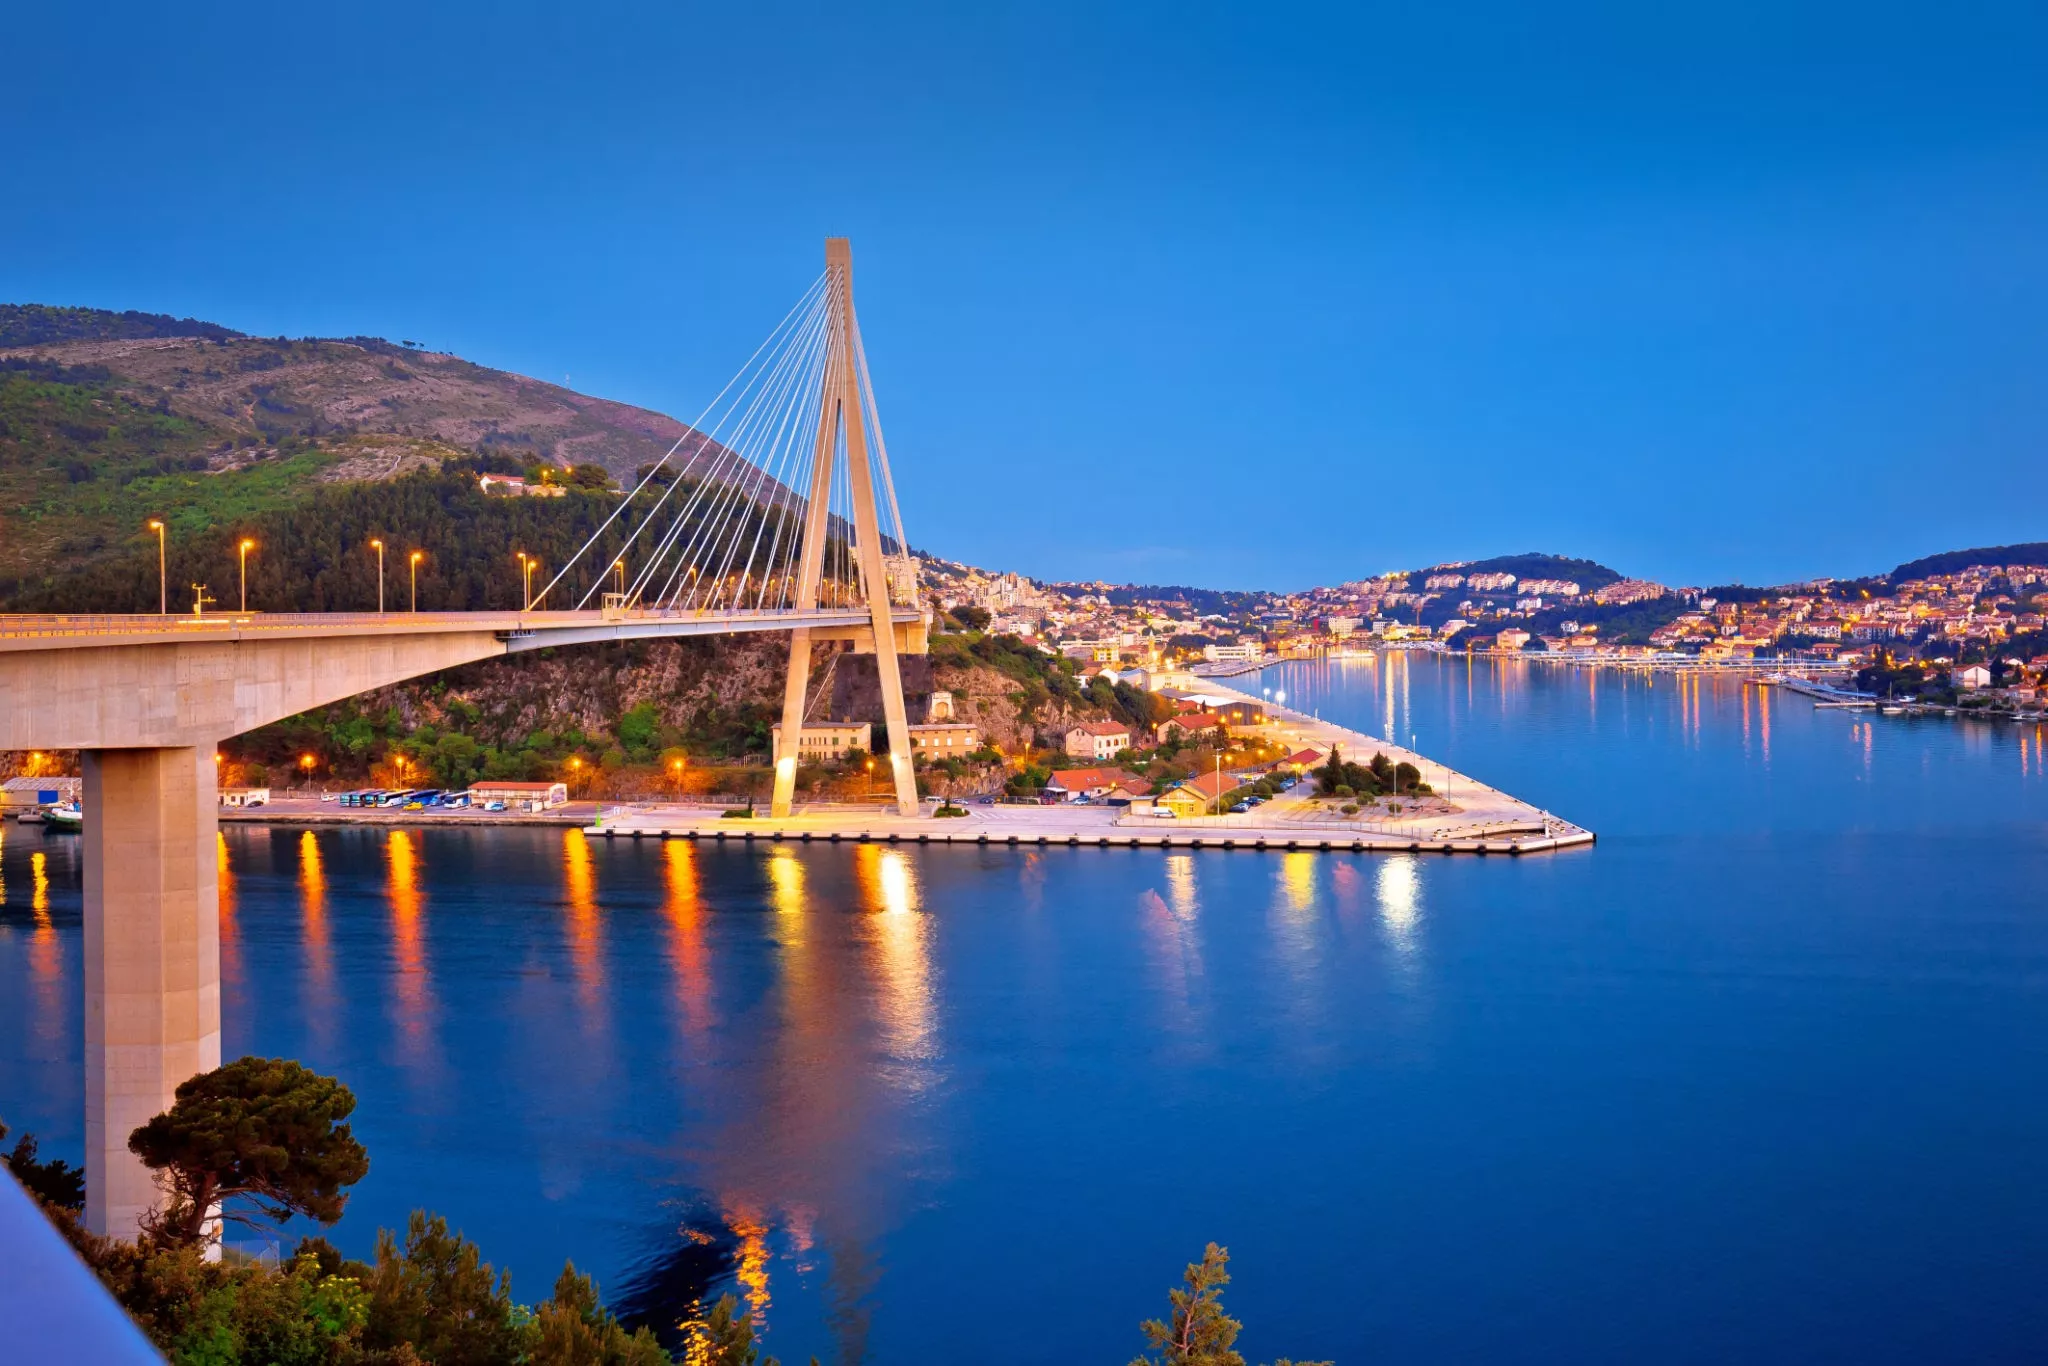 Franjo Tudjman Bridge in Croatia, Europe | Architecture,Bungee Jumping - Rated 4.2